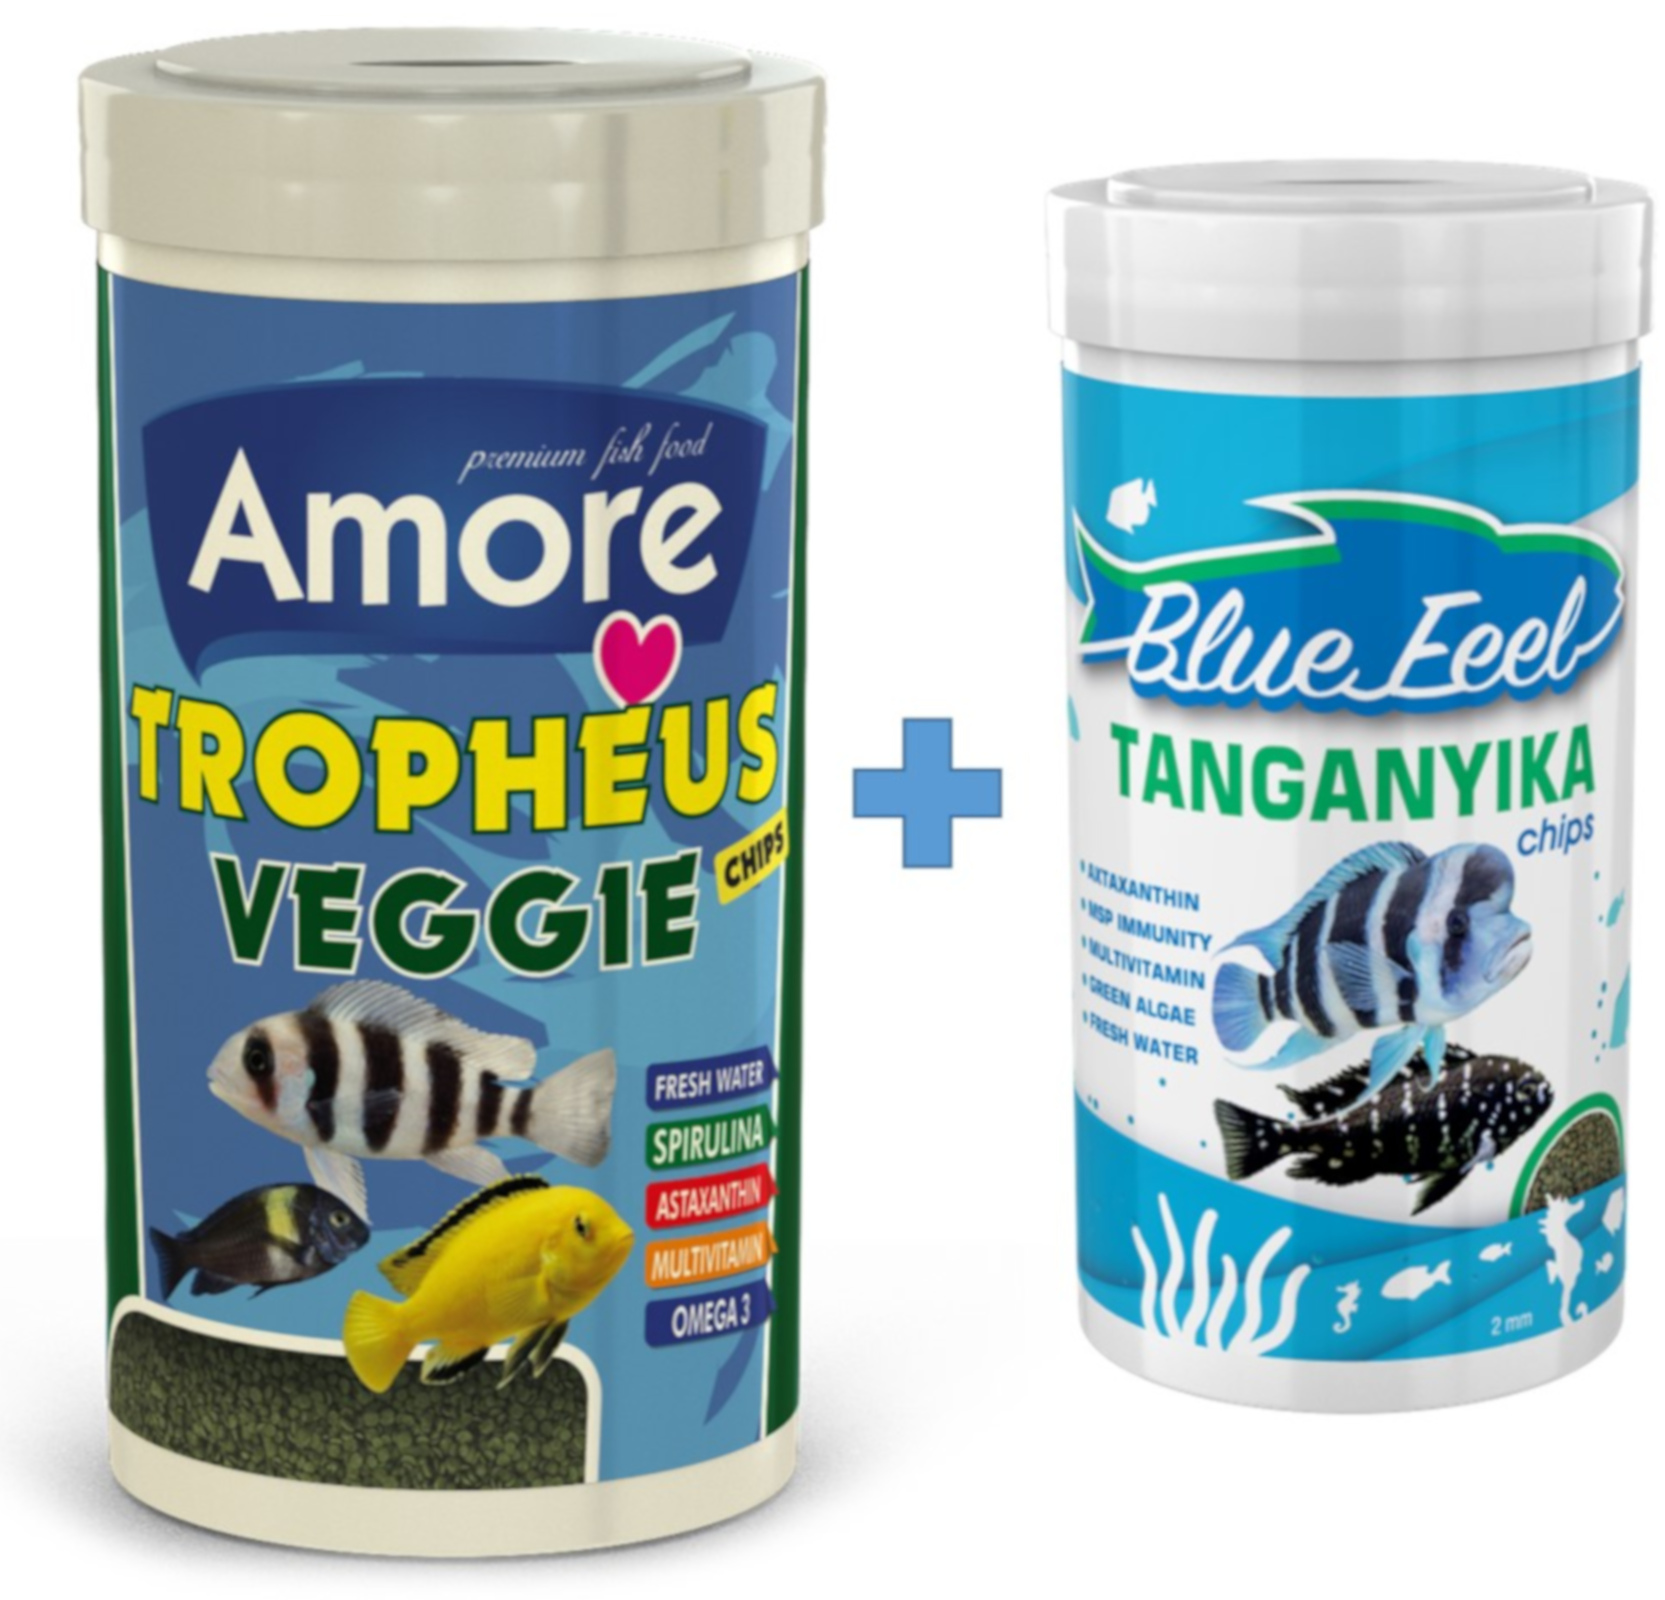 Amore Tropheus Veggie 1000ml Ve Bluefeel Tanganyika Chips 250ml Kutu